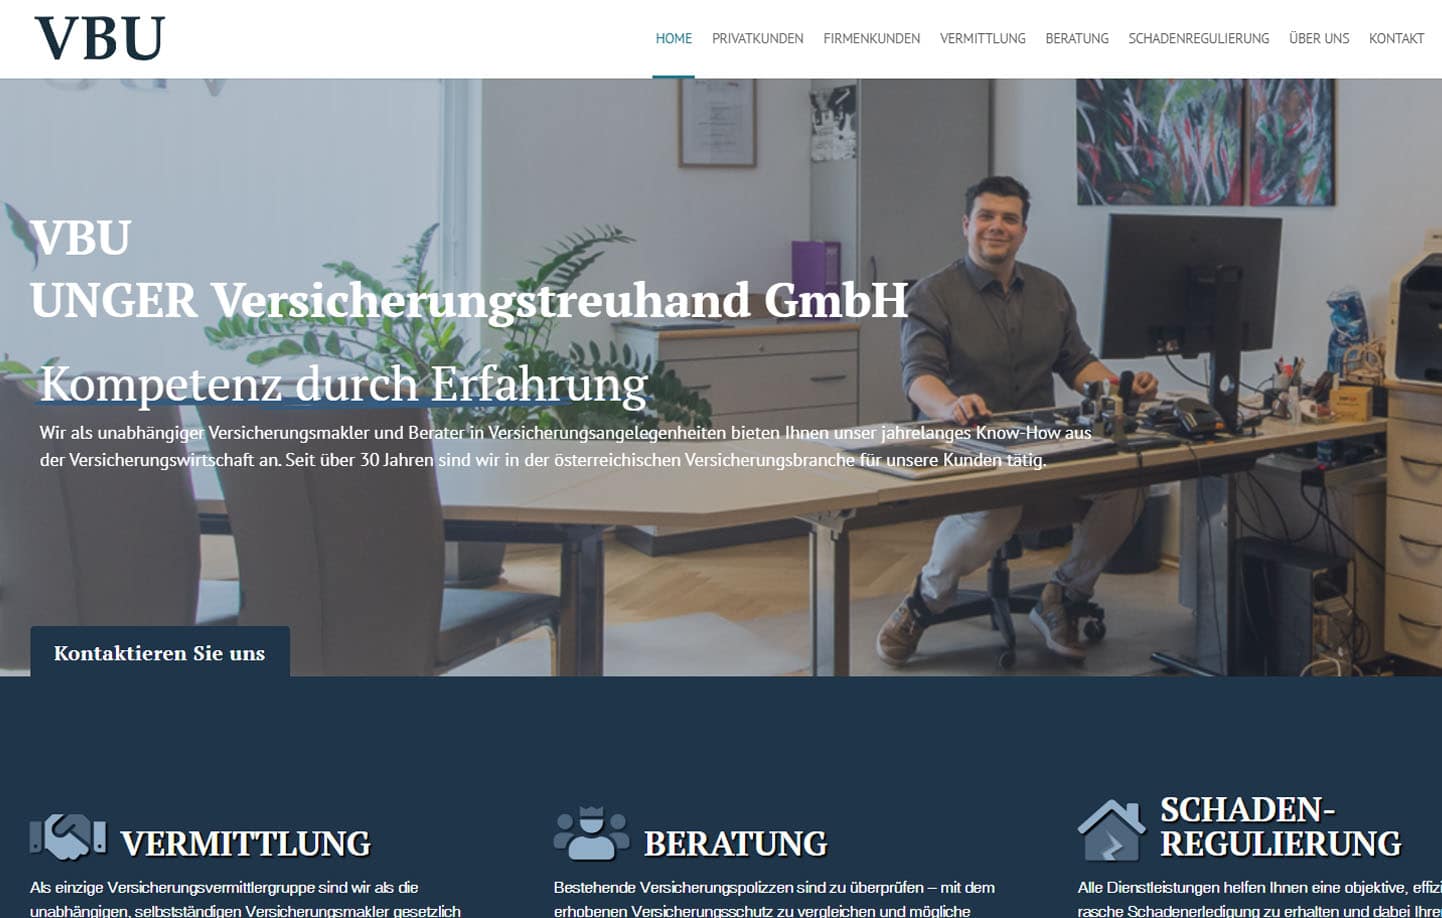 VBU UNGER Versicherungstreuhand GmbH